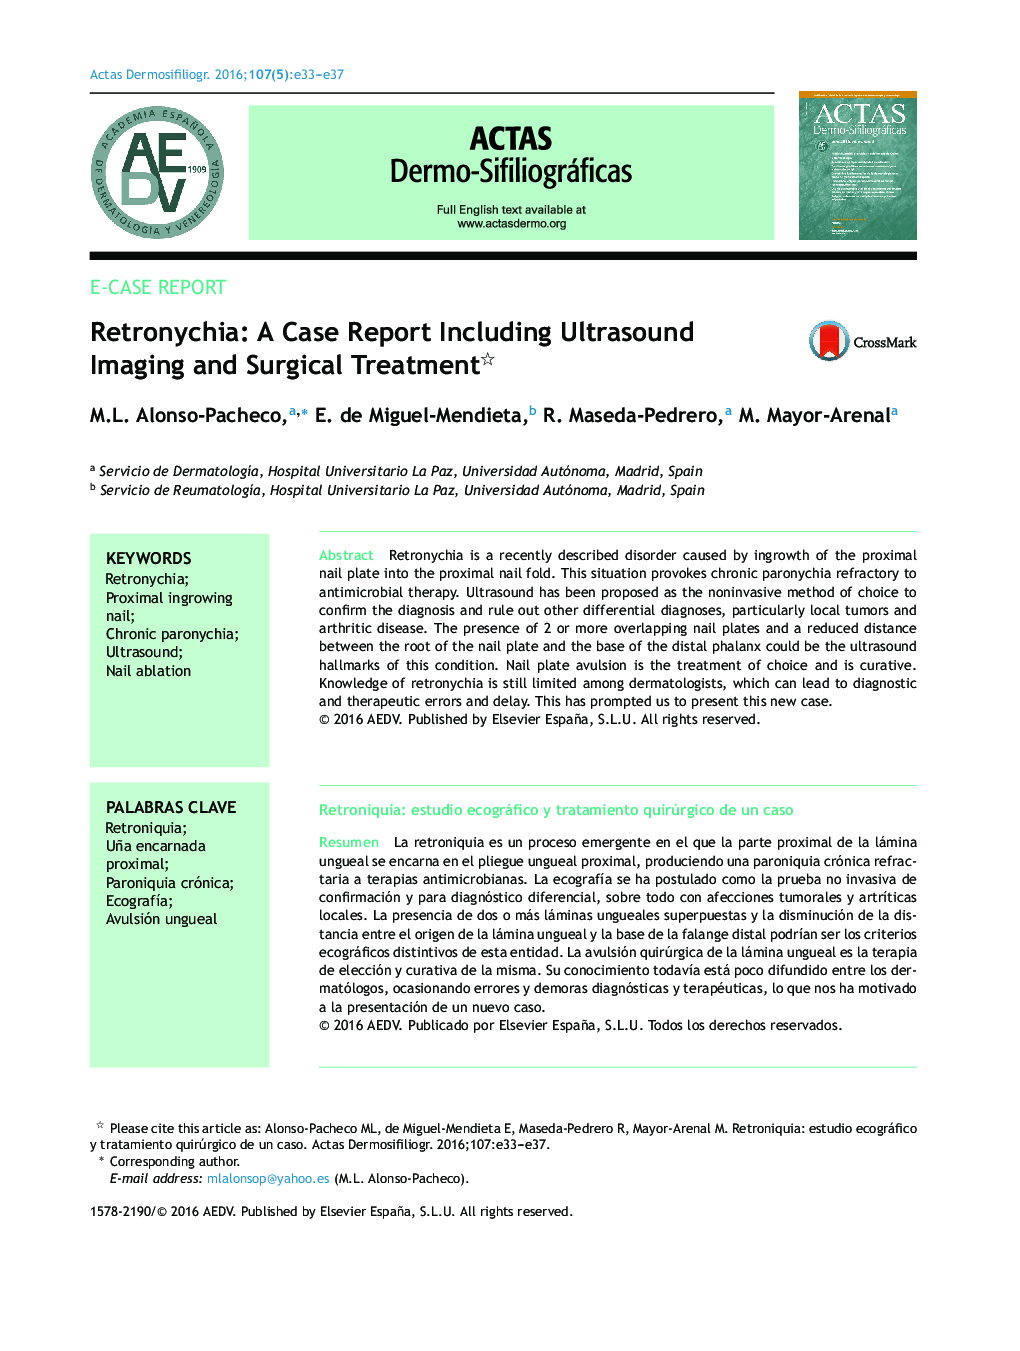 Retronychia: گزارش موردی شامل تصویربرداری اولتراسوند و درمان جراحی